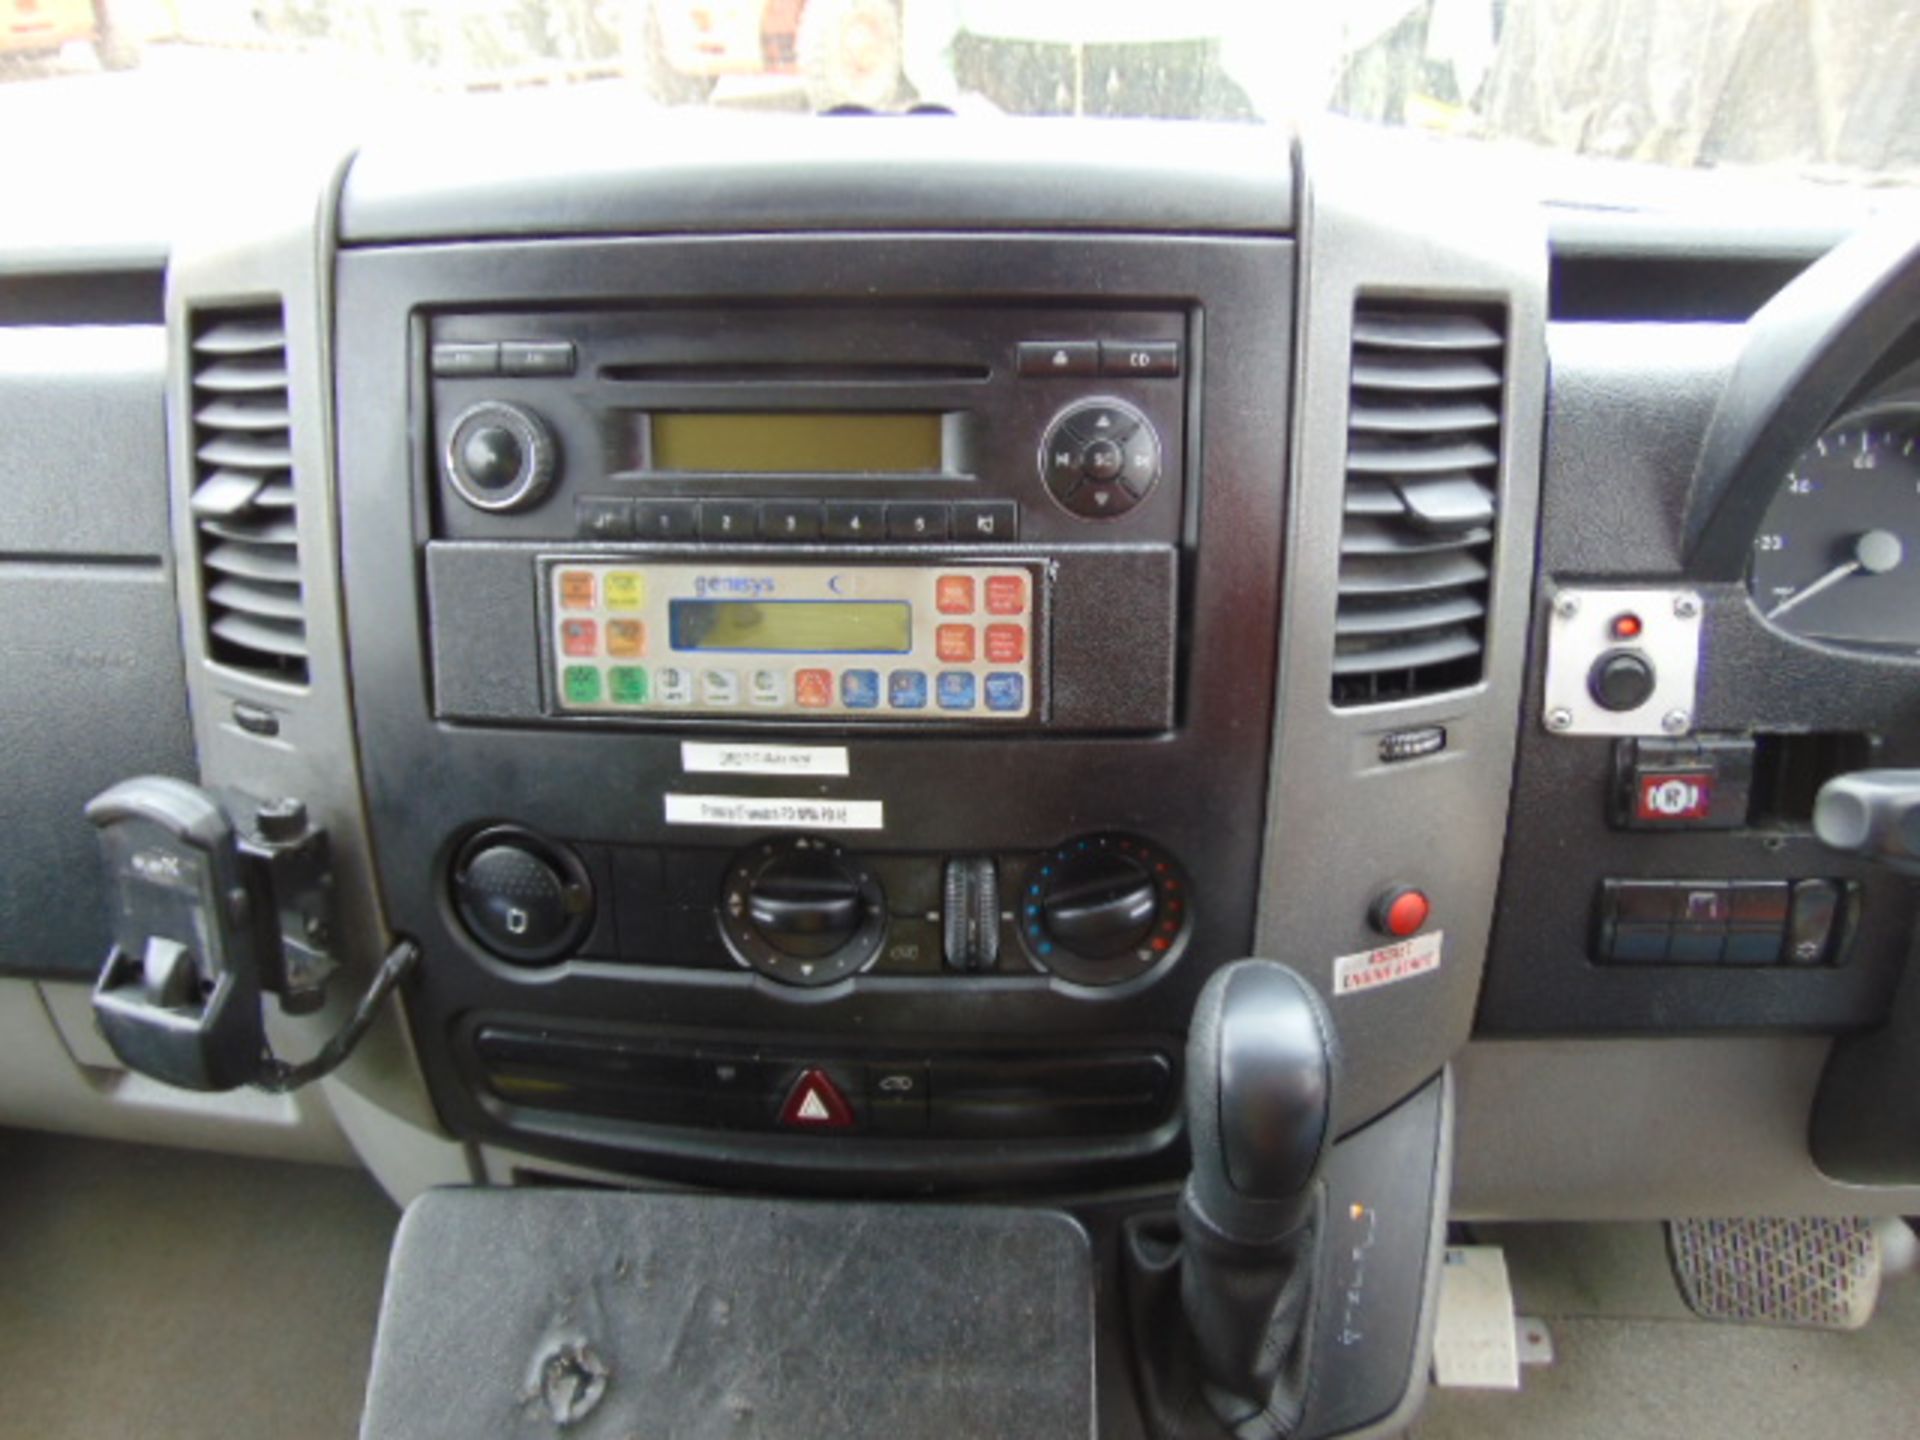 Mercedes Sprinter 515 CDI Turbo diesel ambulance - Image 10 of 23